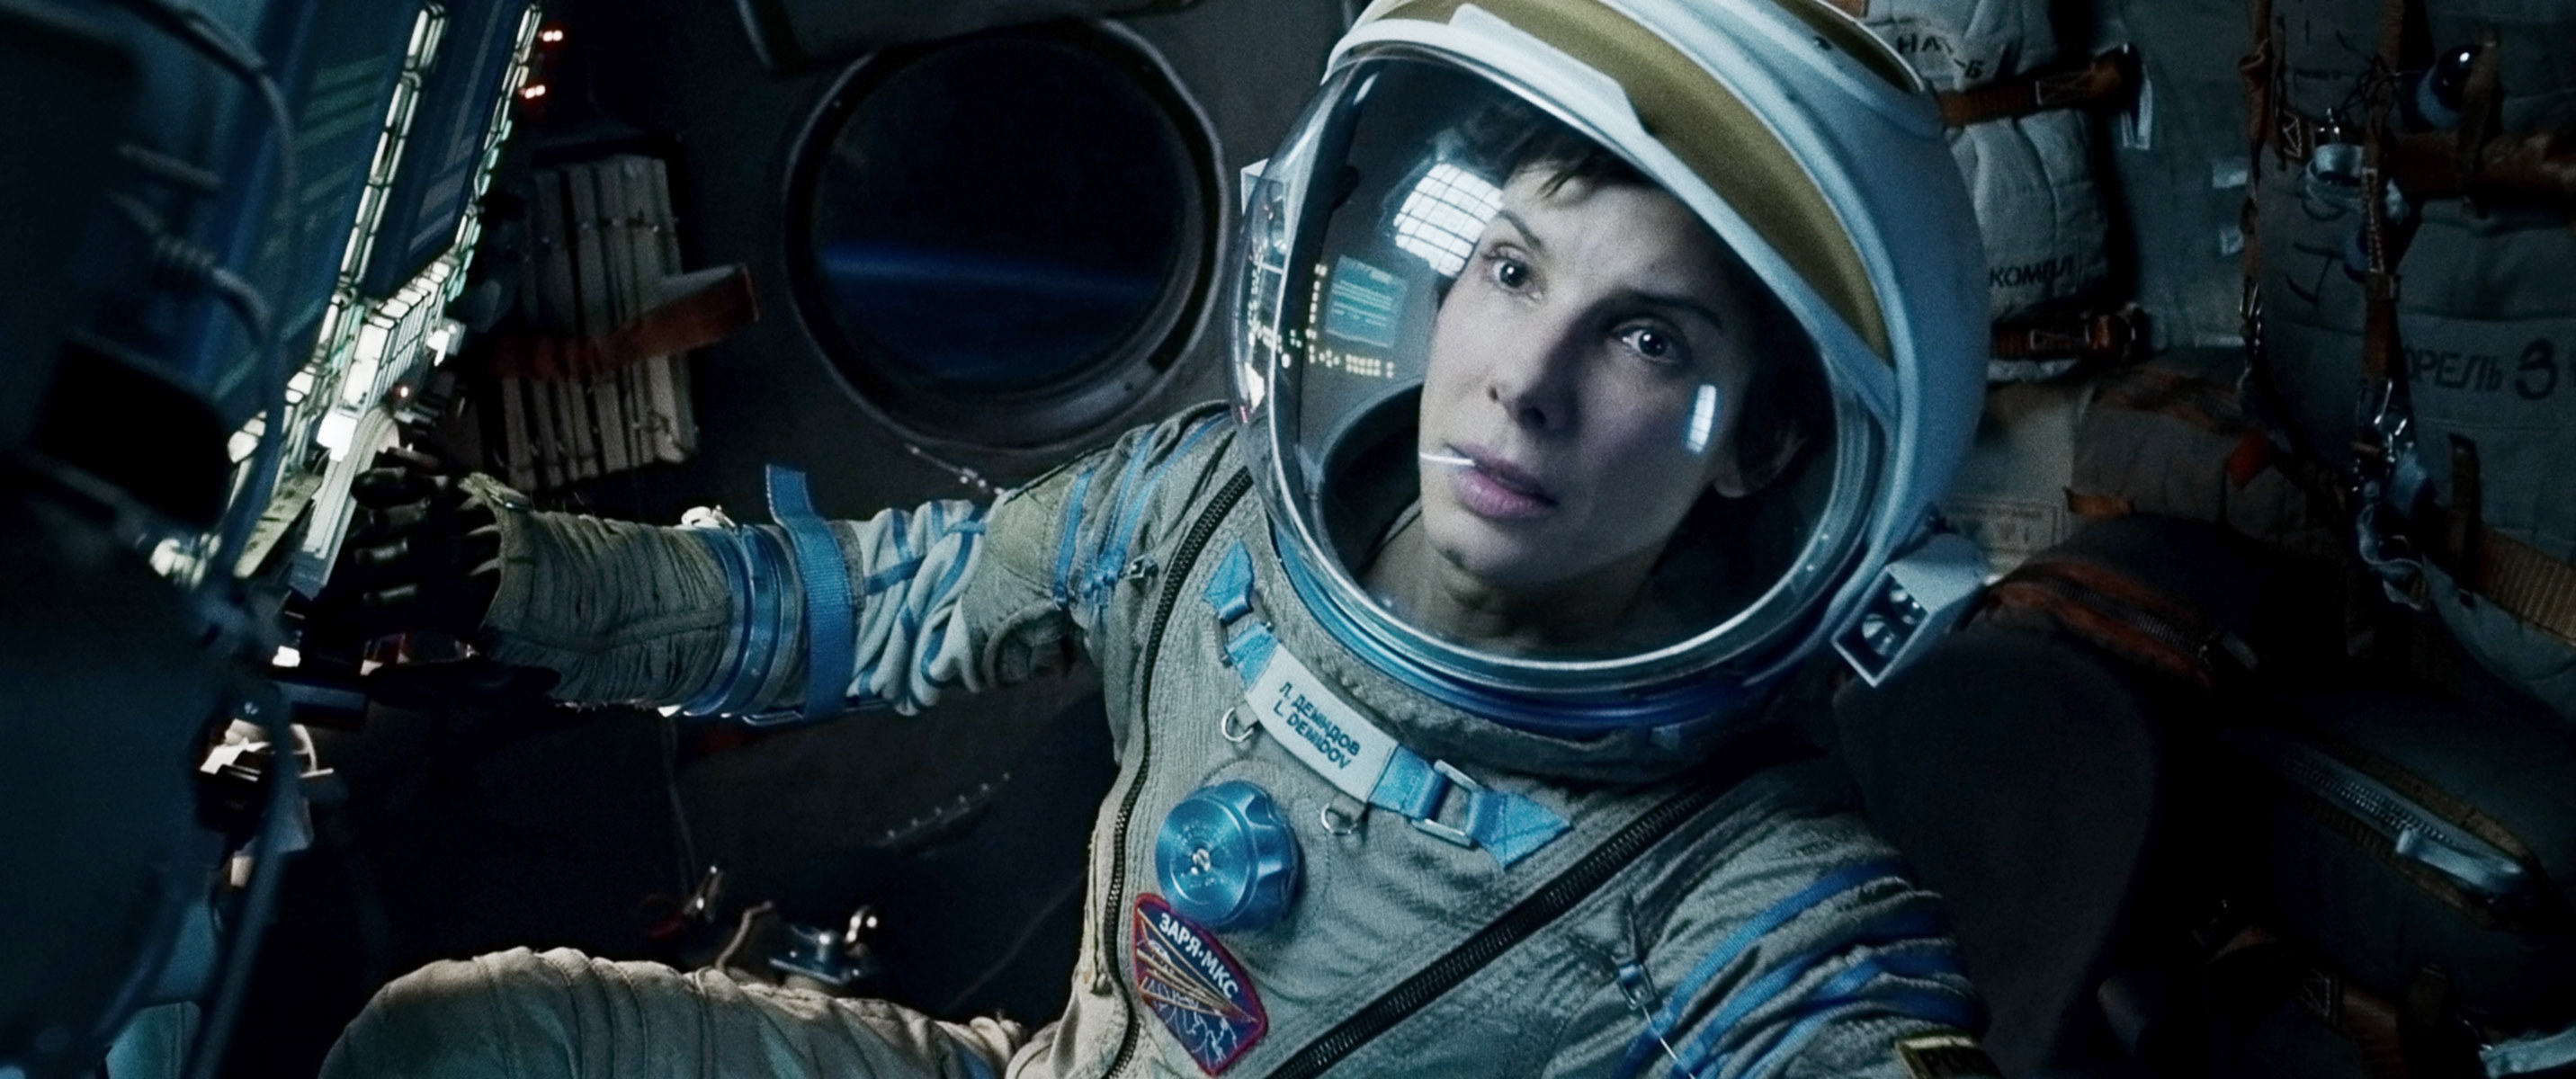 Sandra Bullock in a space suit in a scene from Gravity